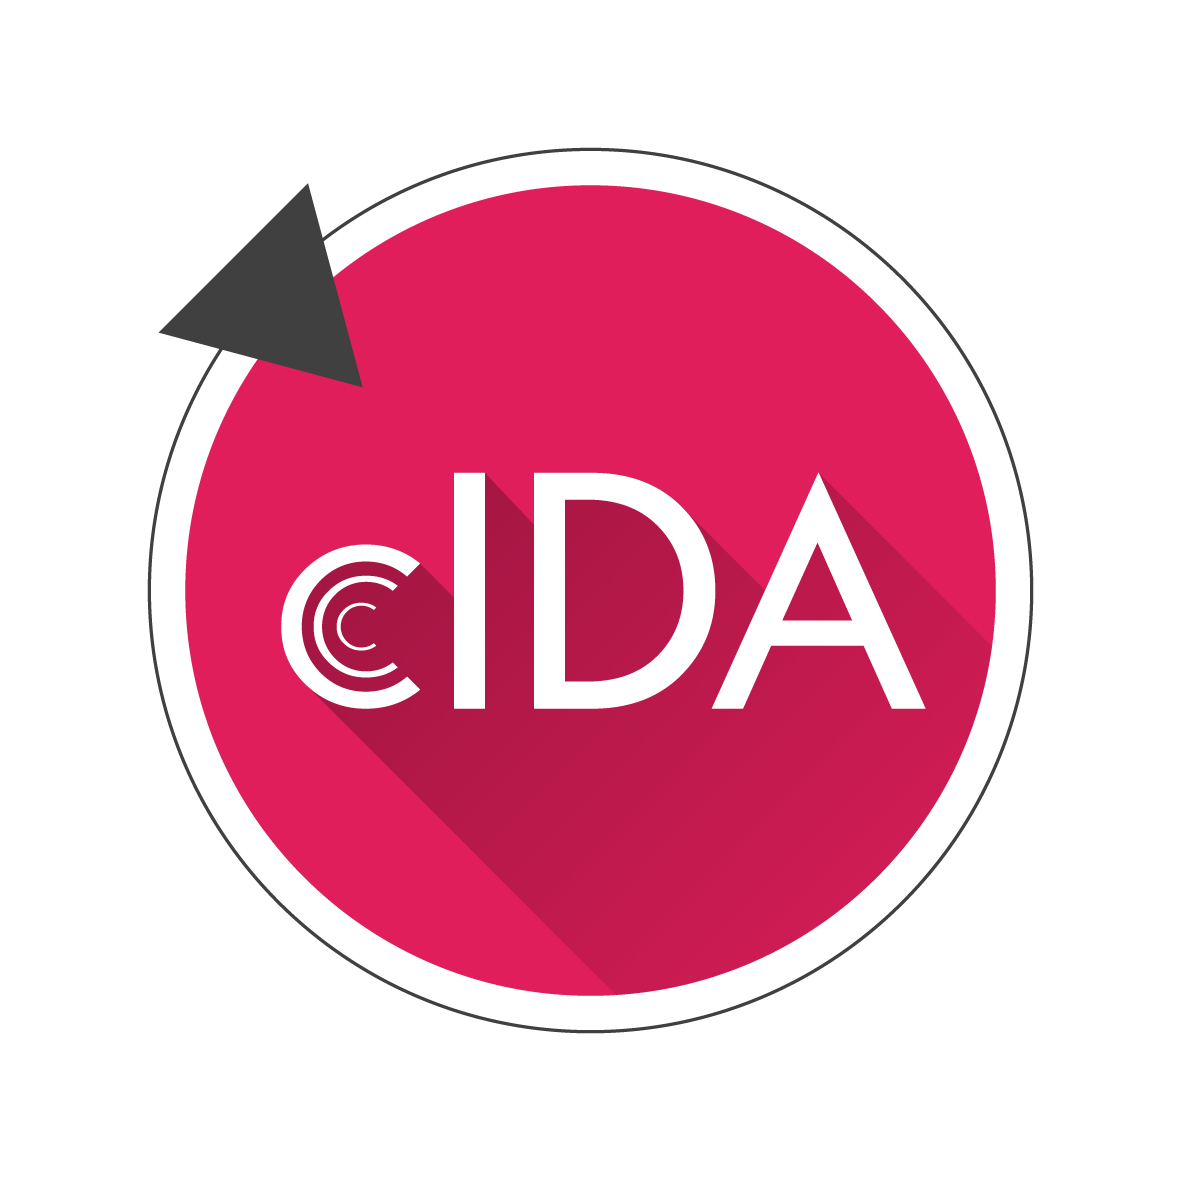 cIDA logo in purple